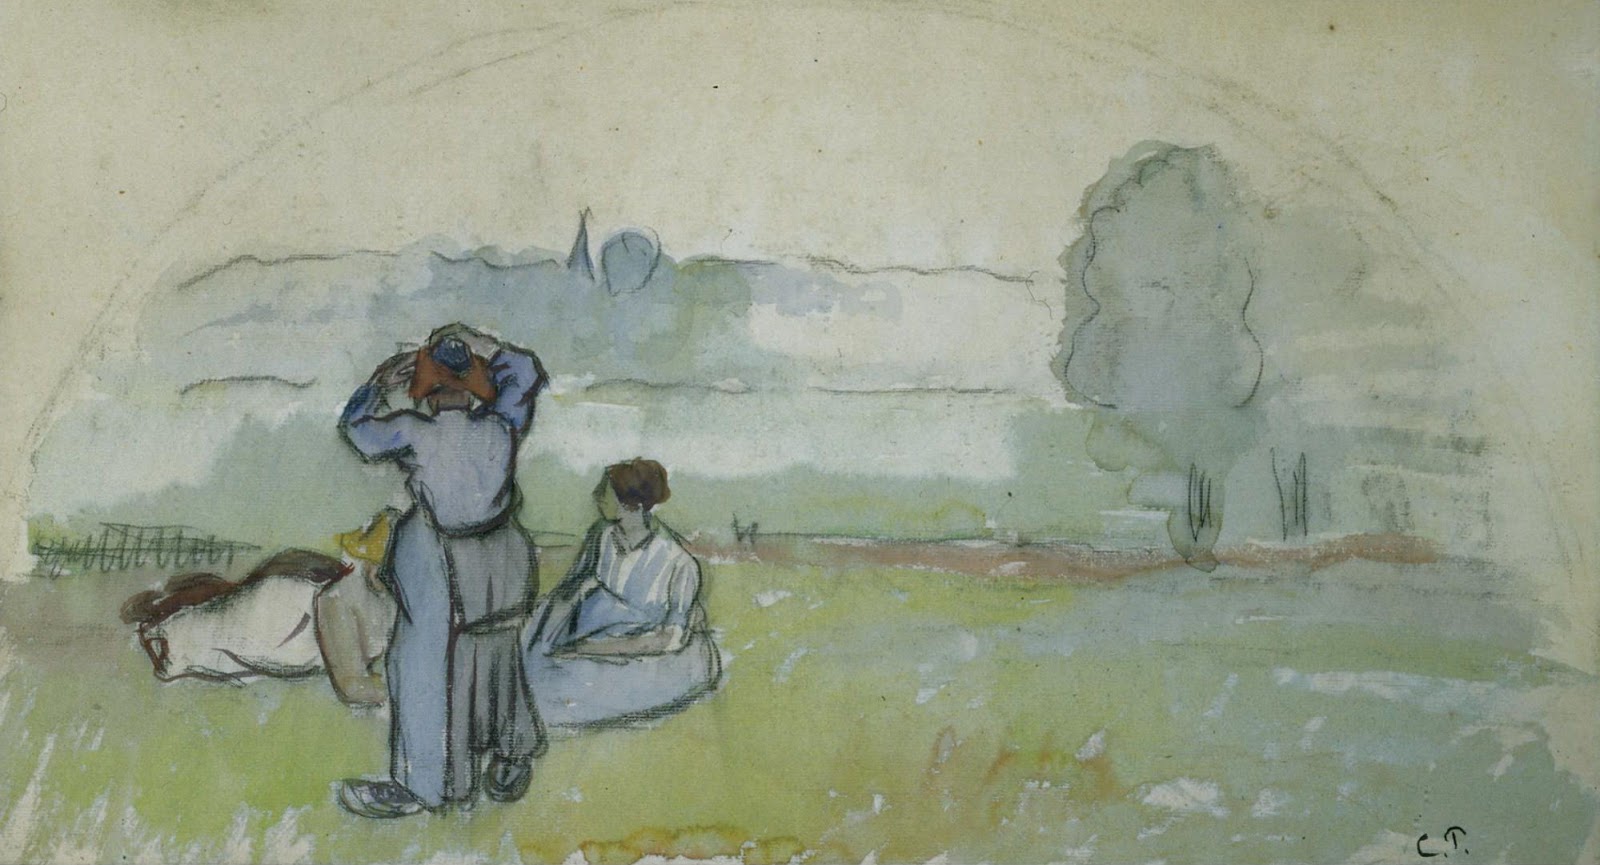 Camille+Pissarro-1830-1903 (394).jpg